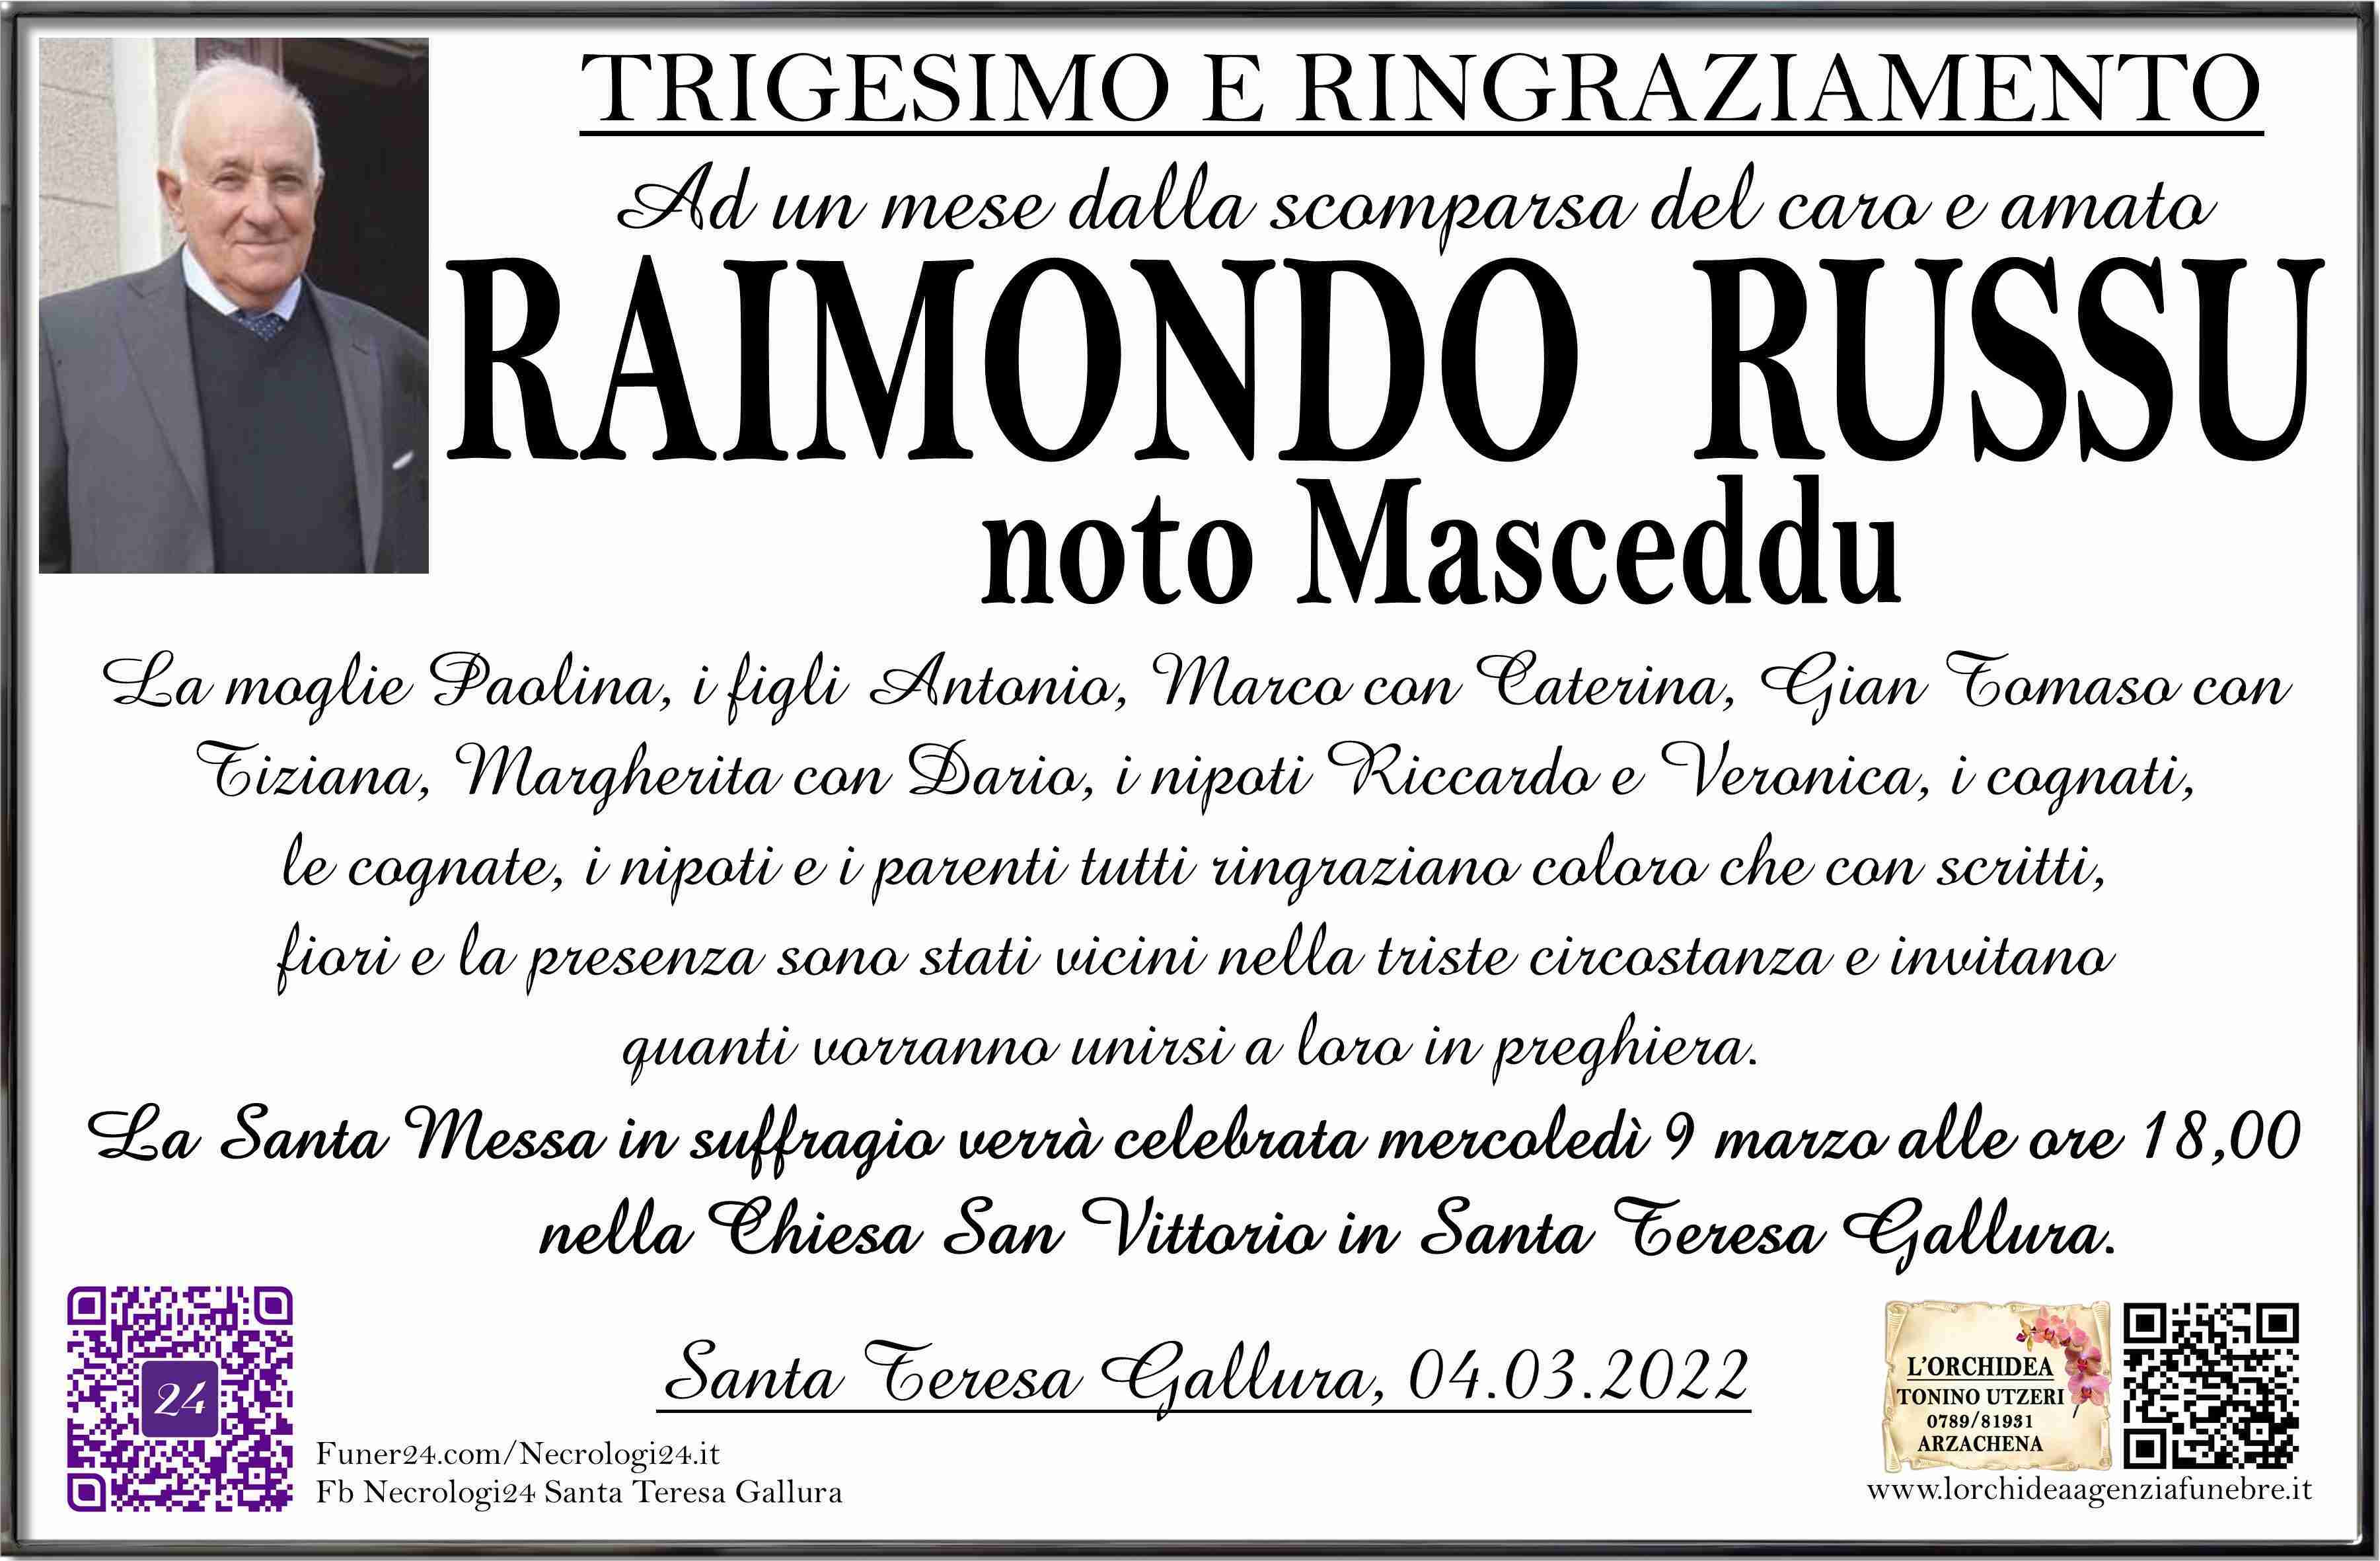 Raimondo Russu